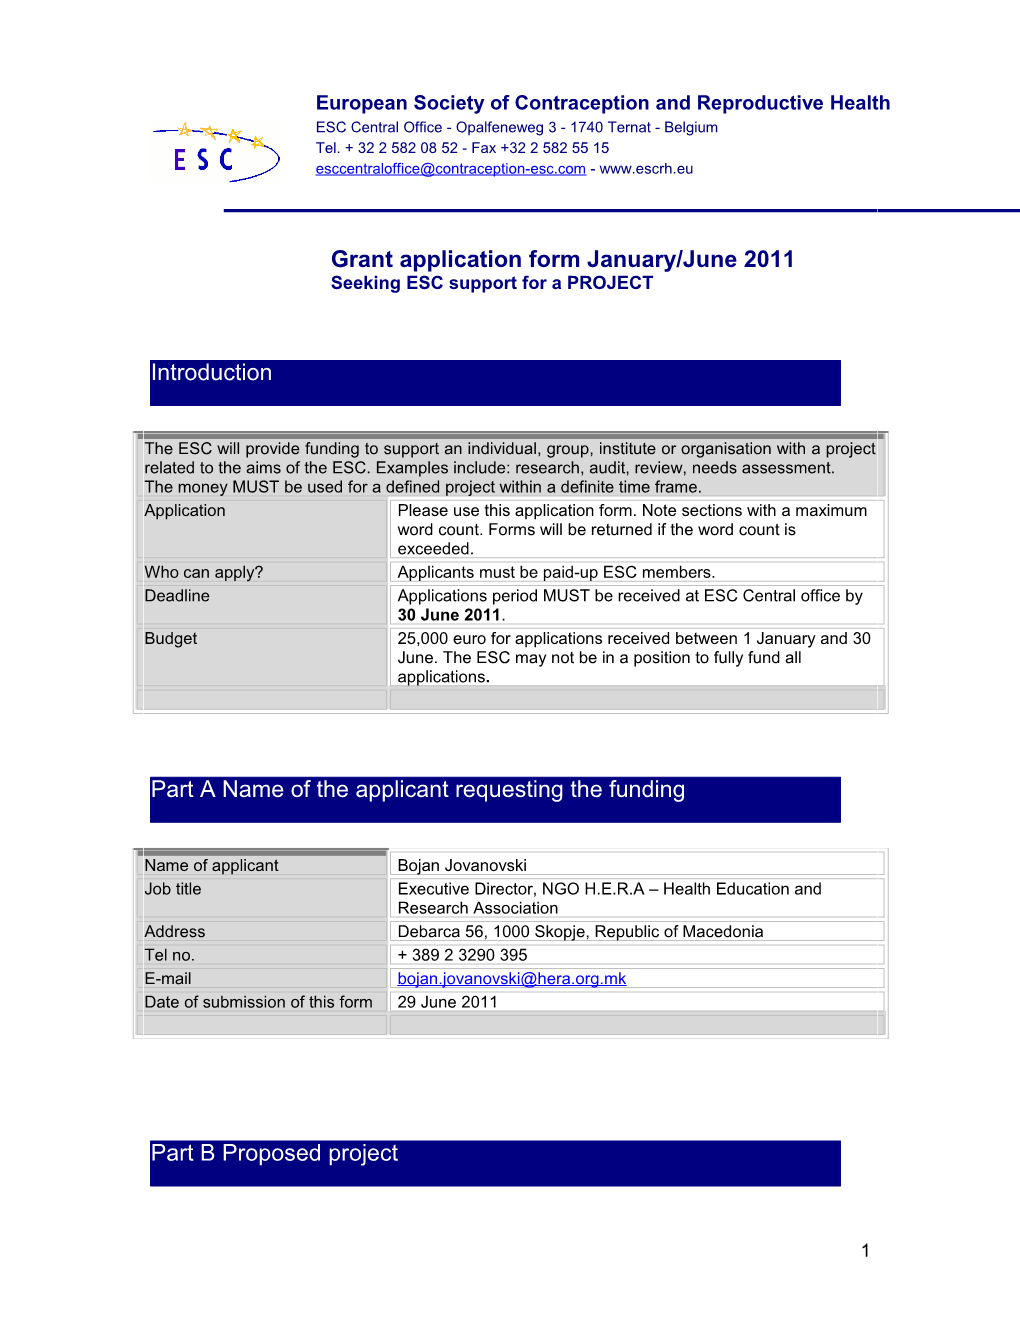 Grant Application Form January/June 2011